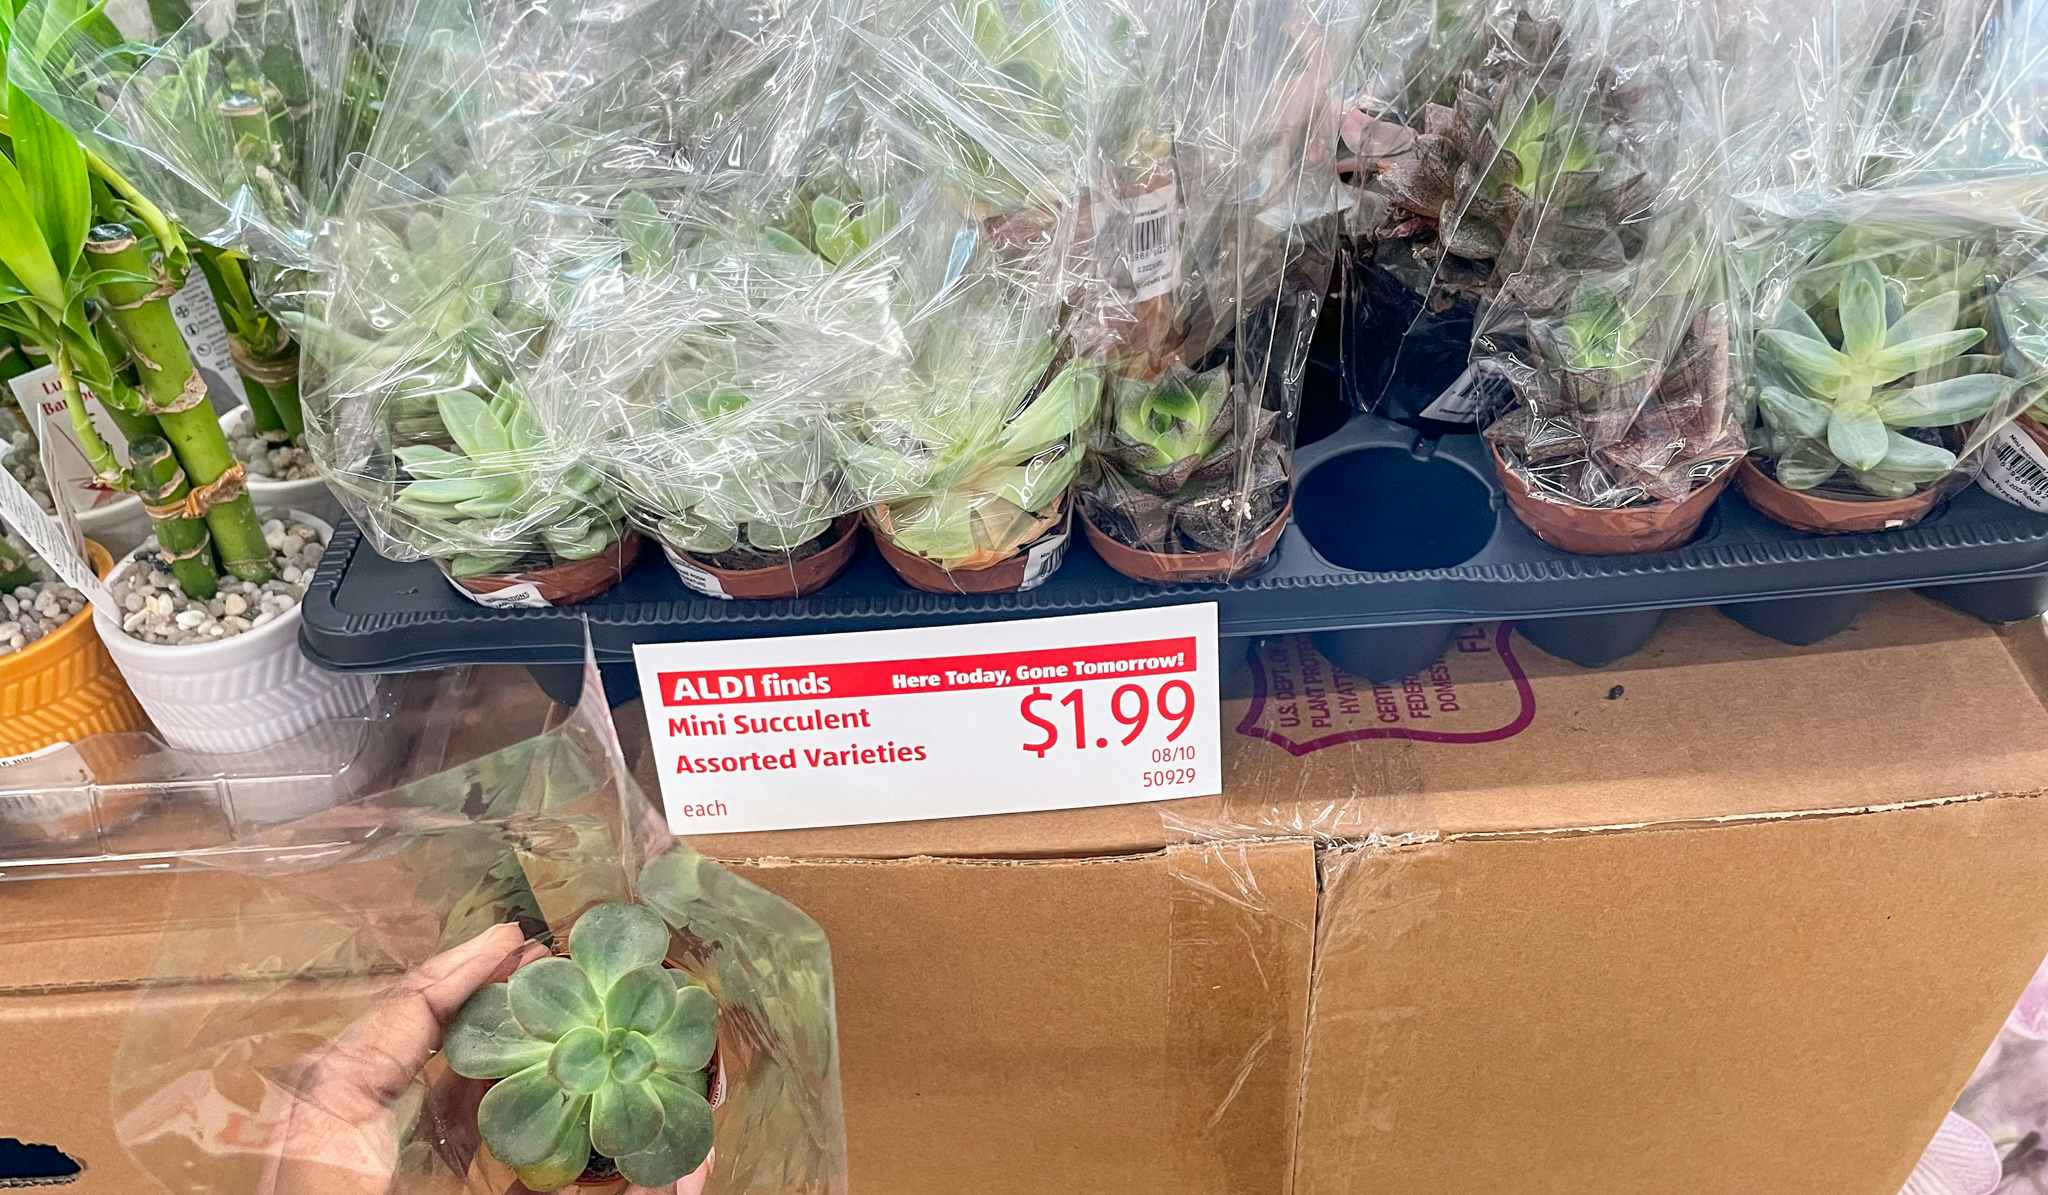 mini succulent held next to a sale sign at aldi